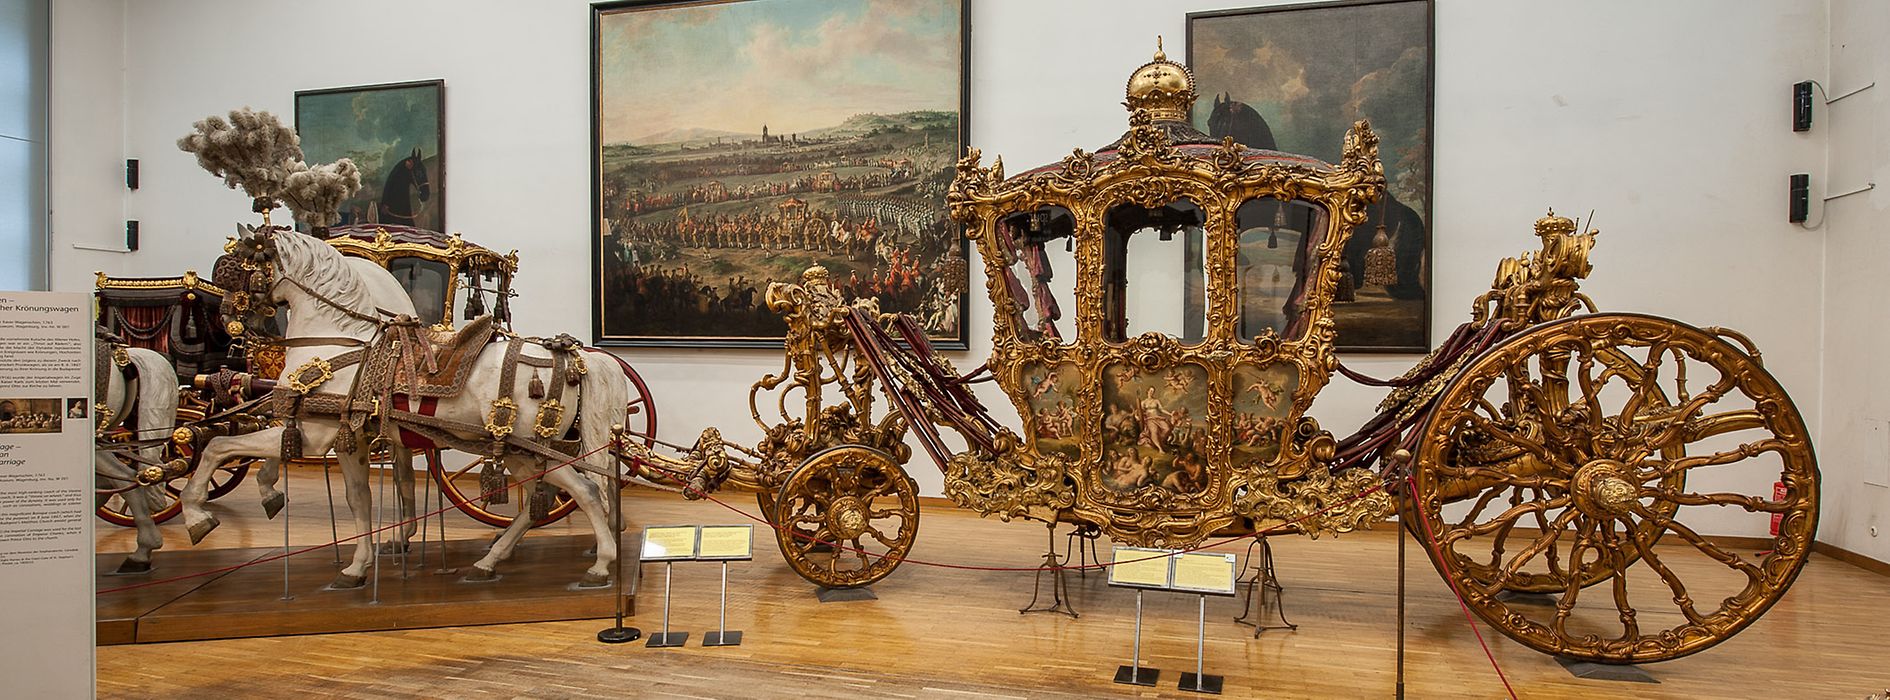 Museo Wagenburg, carruaie dorado